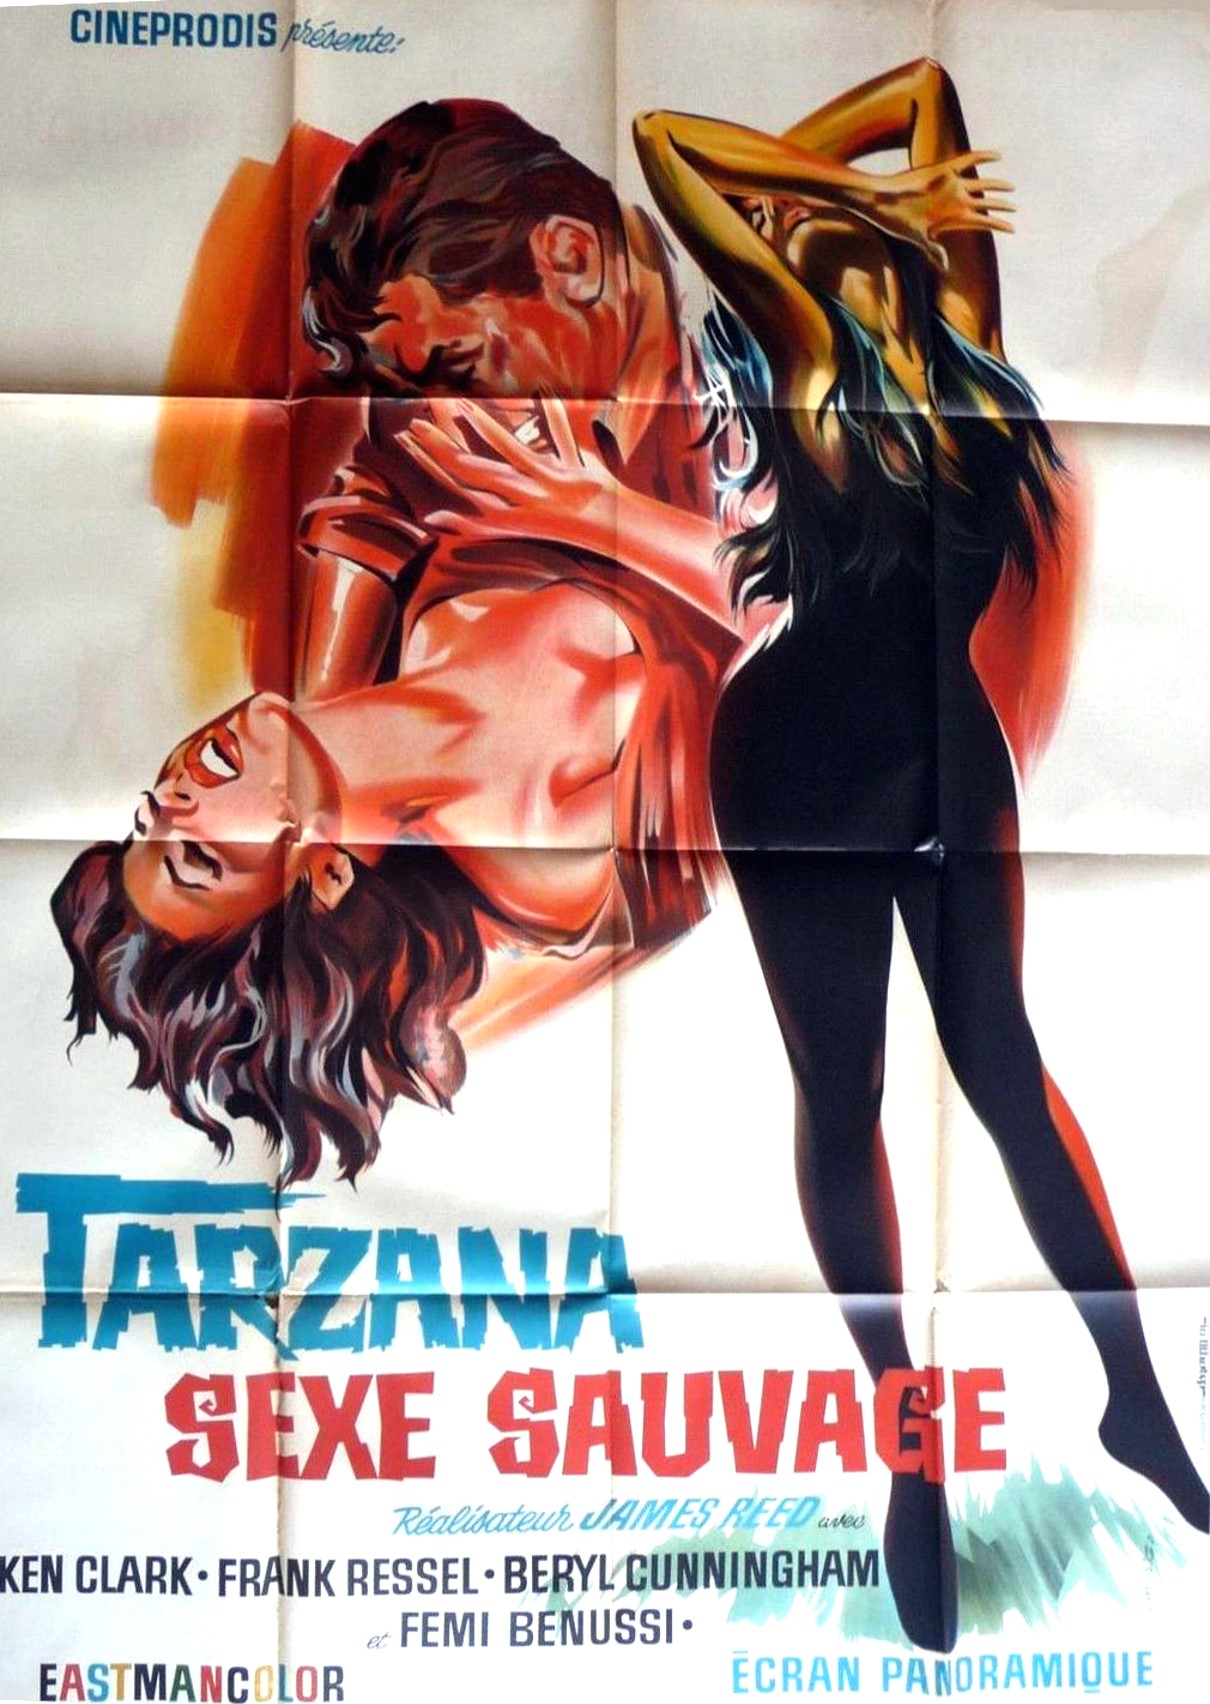 affiche du film Tarzana, sexe sauvage